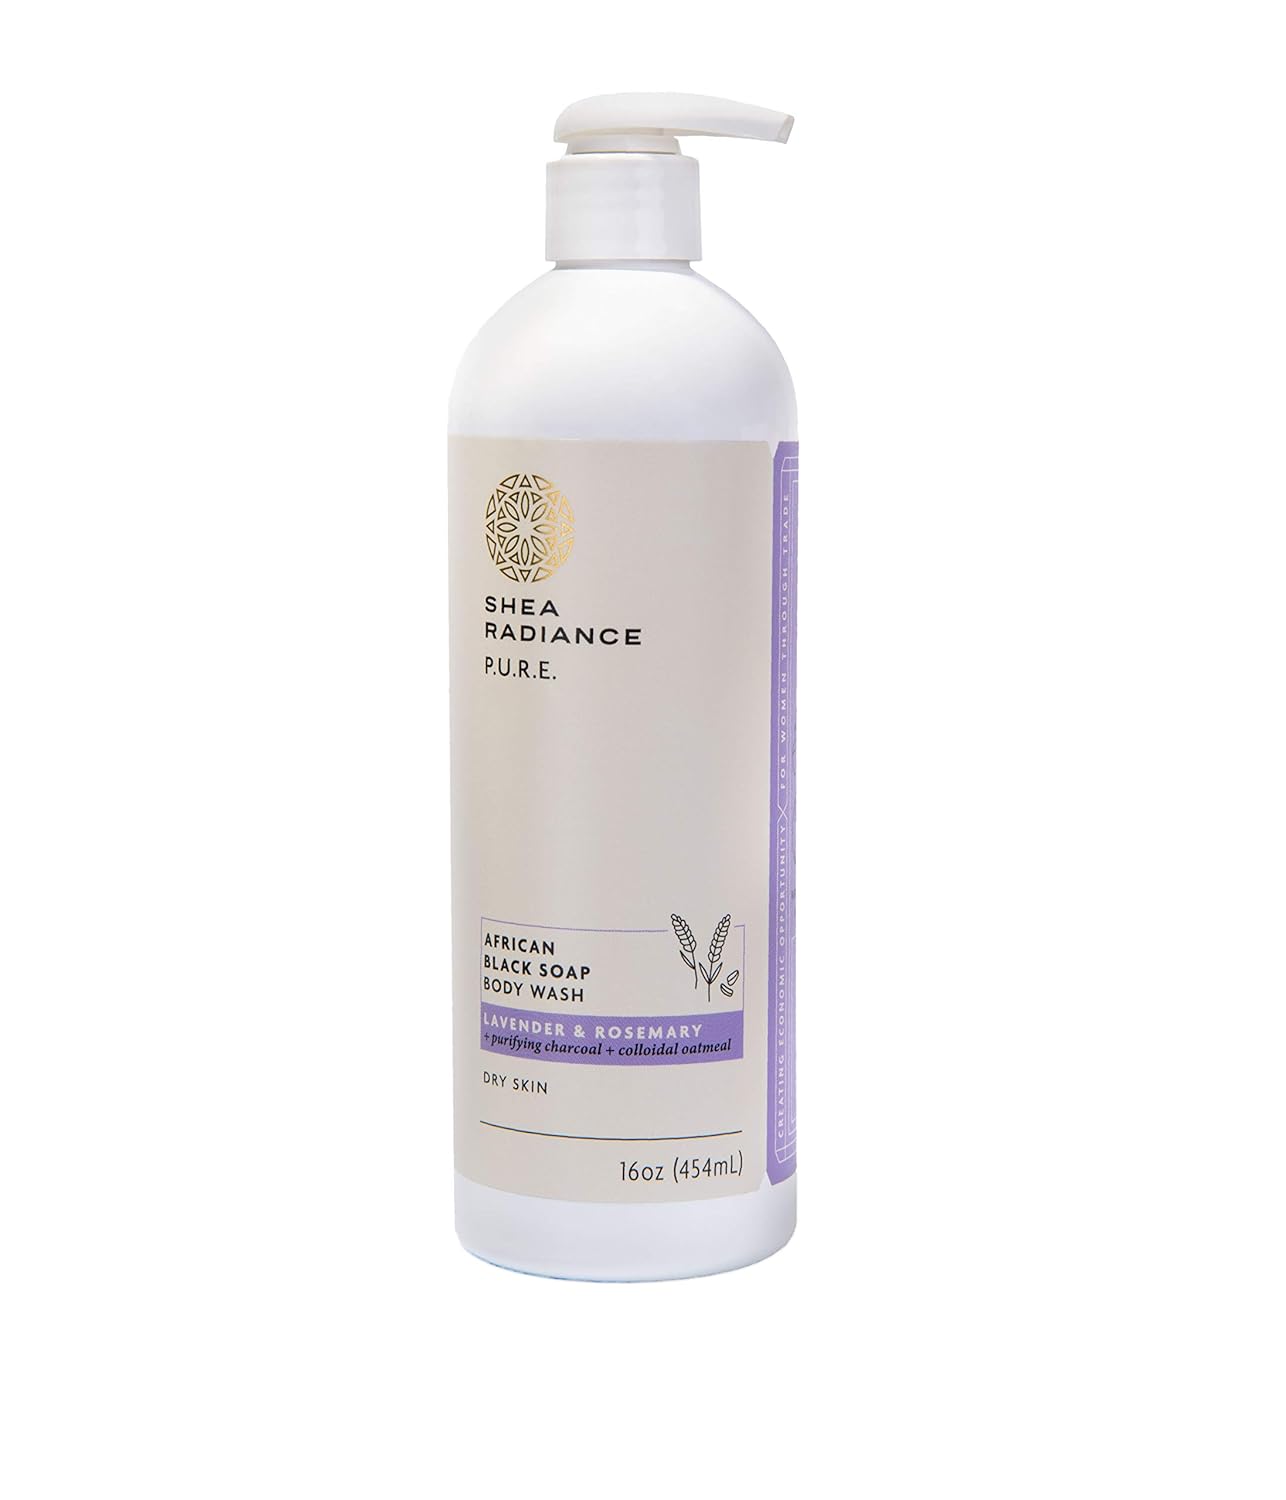 Shea Radiance African Black Soap Body Wash - Dry Skin, Eczema, Rashes, Blemish Cleanser | Lavender Rosemary (16 )